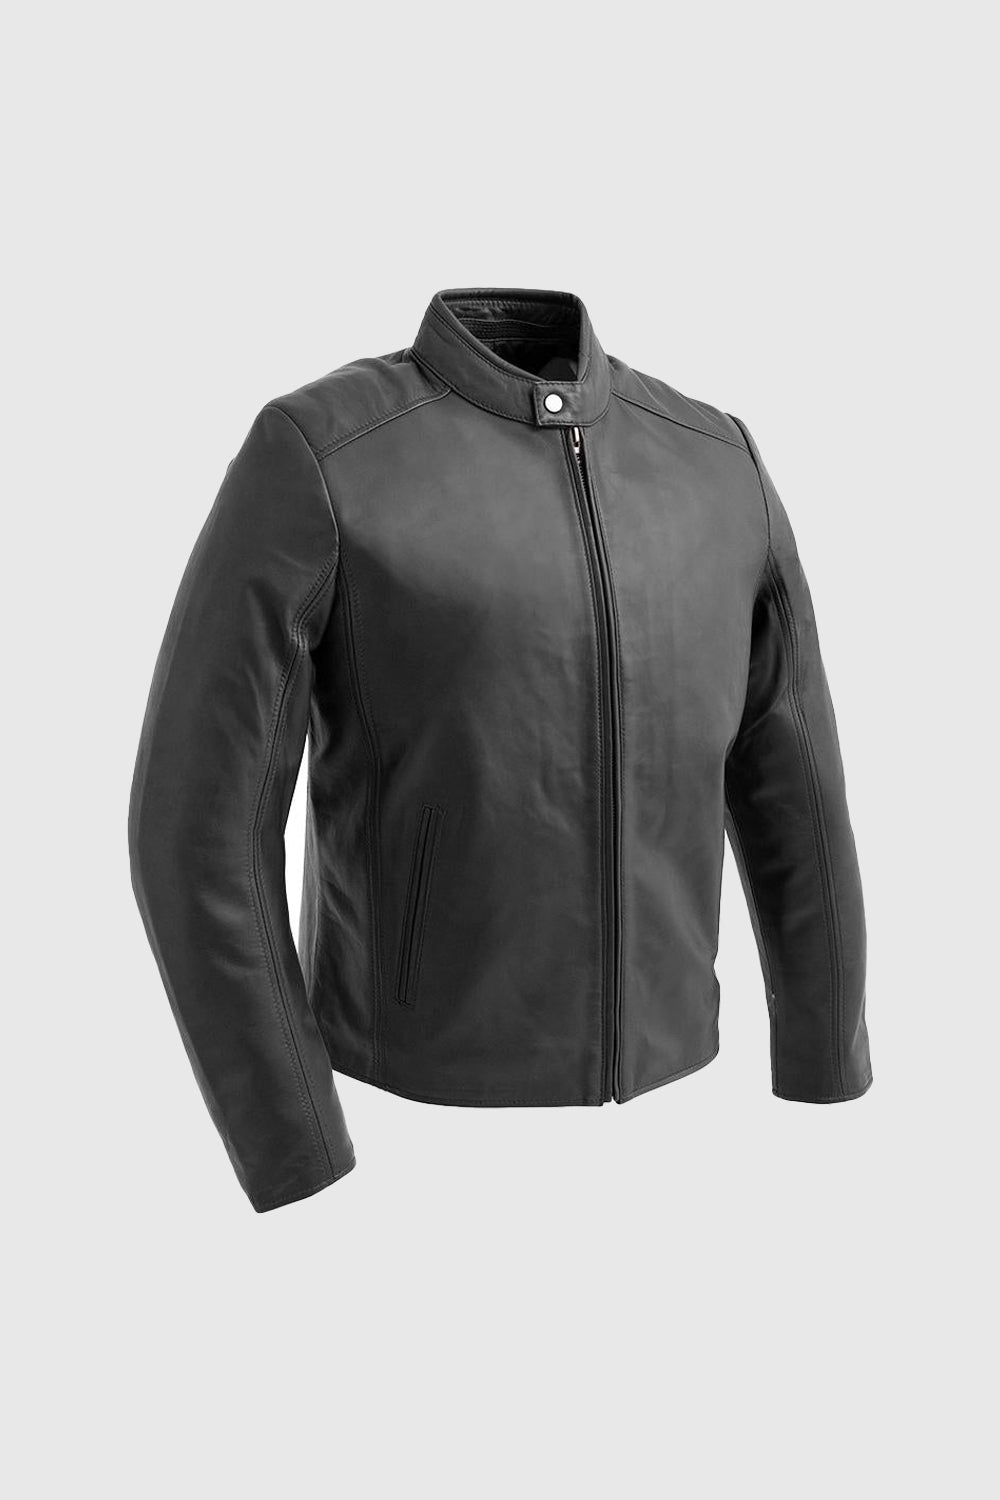 Blake Mens Leather Jacket Black Men's Leather Jacket Whet Blu NYC S BLACK 